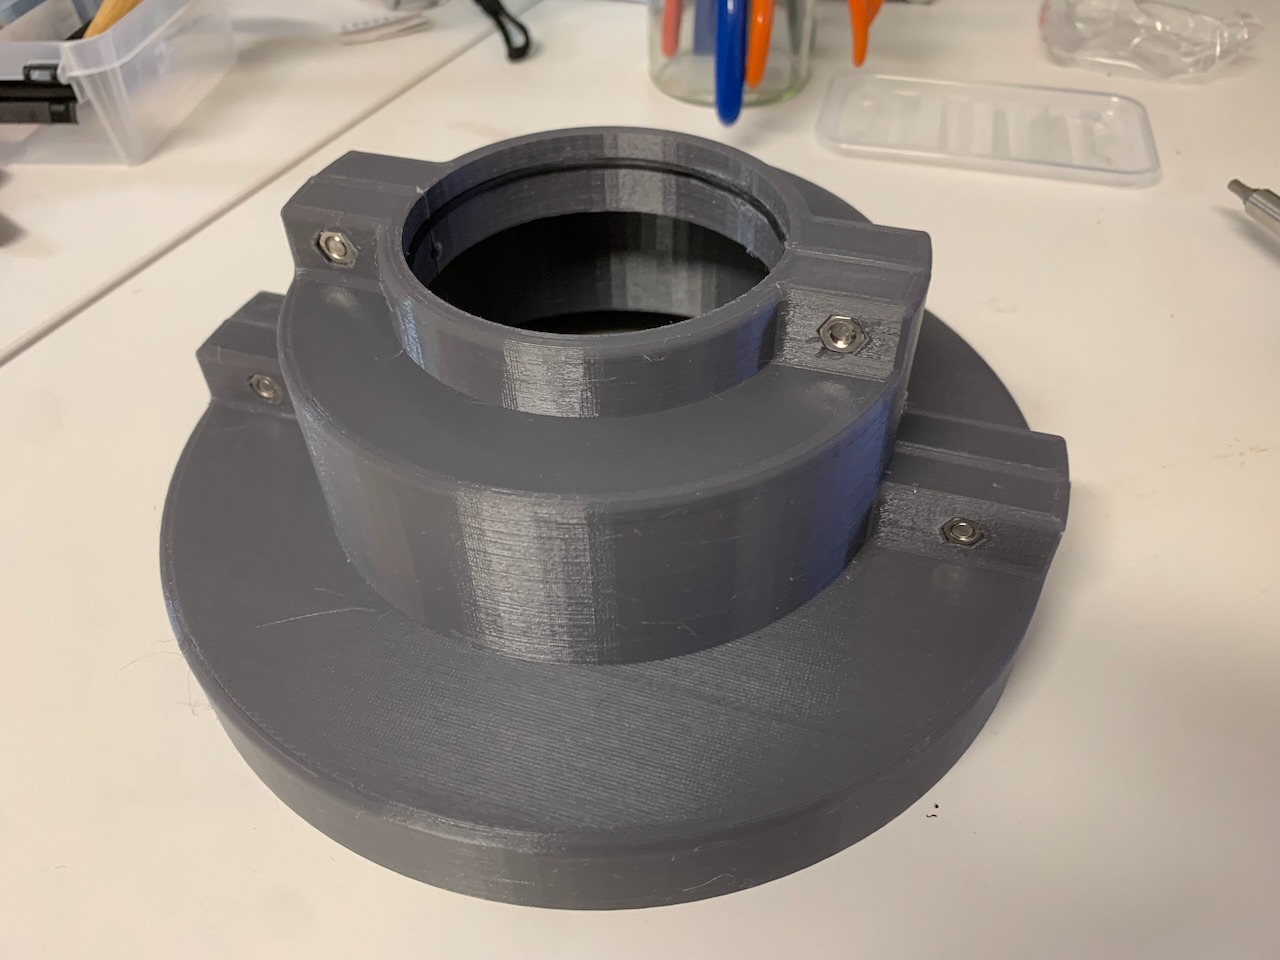 3D printed bearing protector